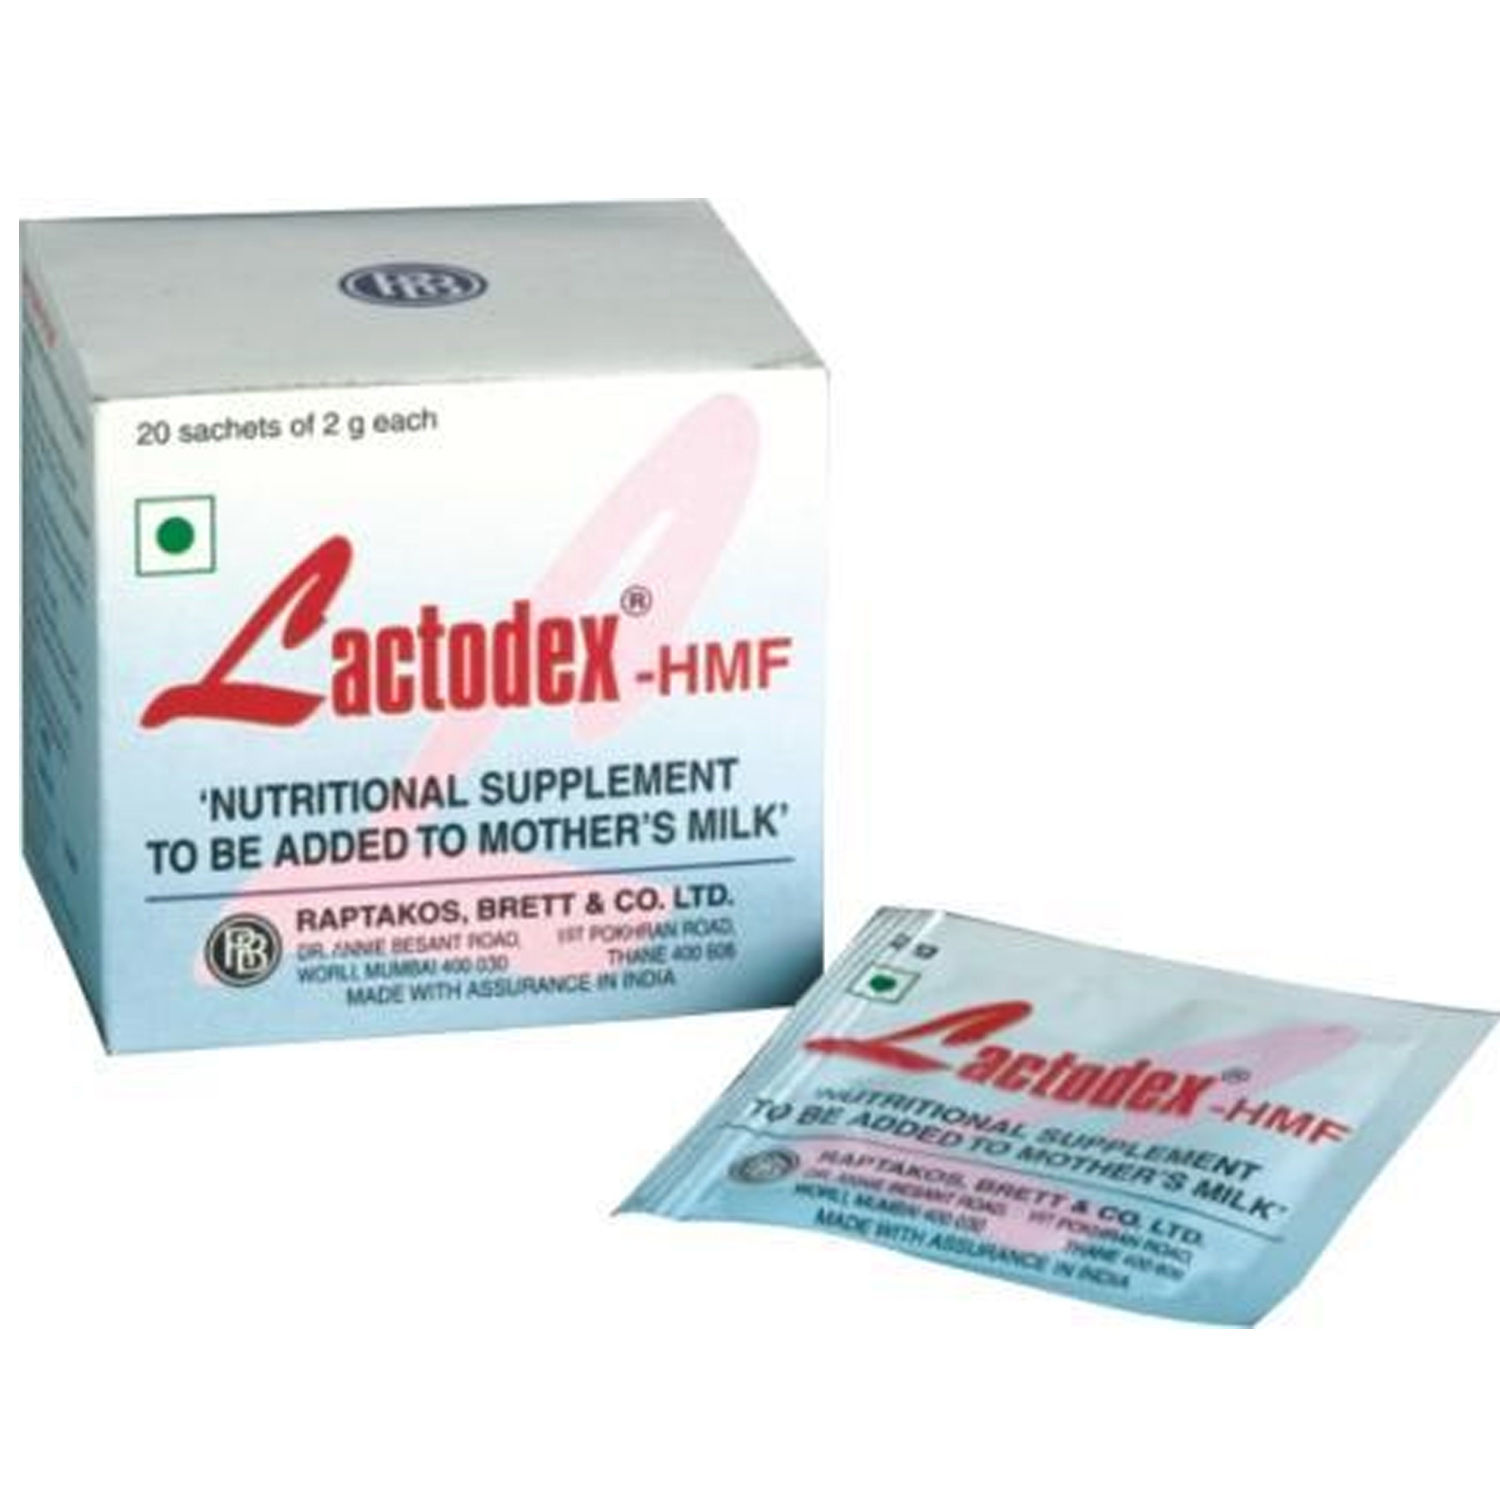 Buy Lactodex-Hmf Powder, 2 gm Online